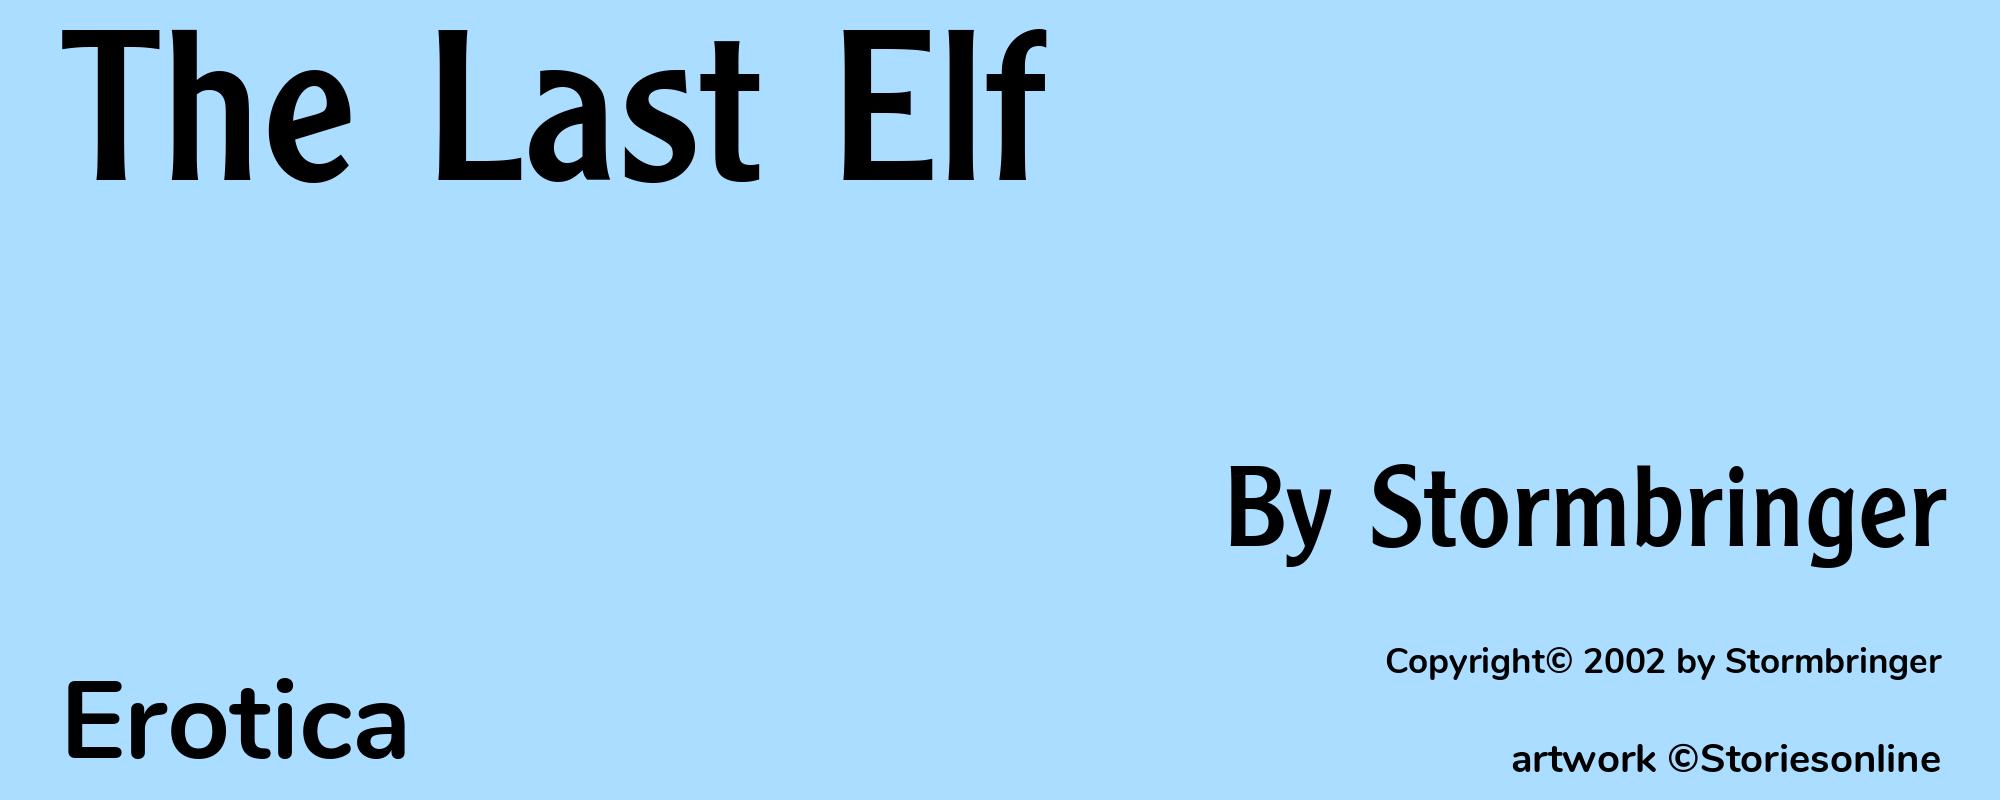 The Last Elf - Cover